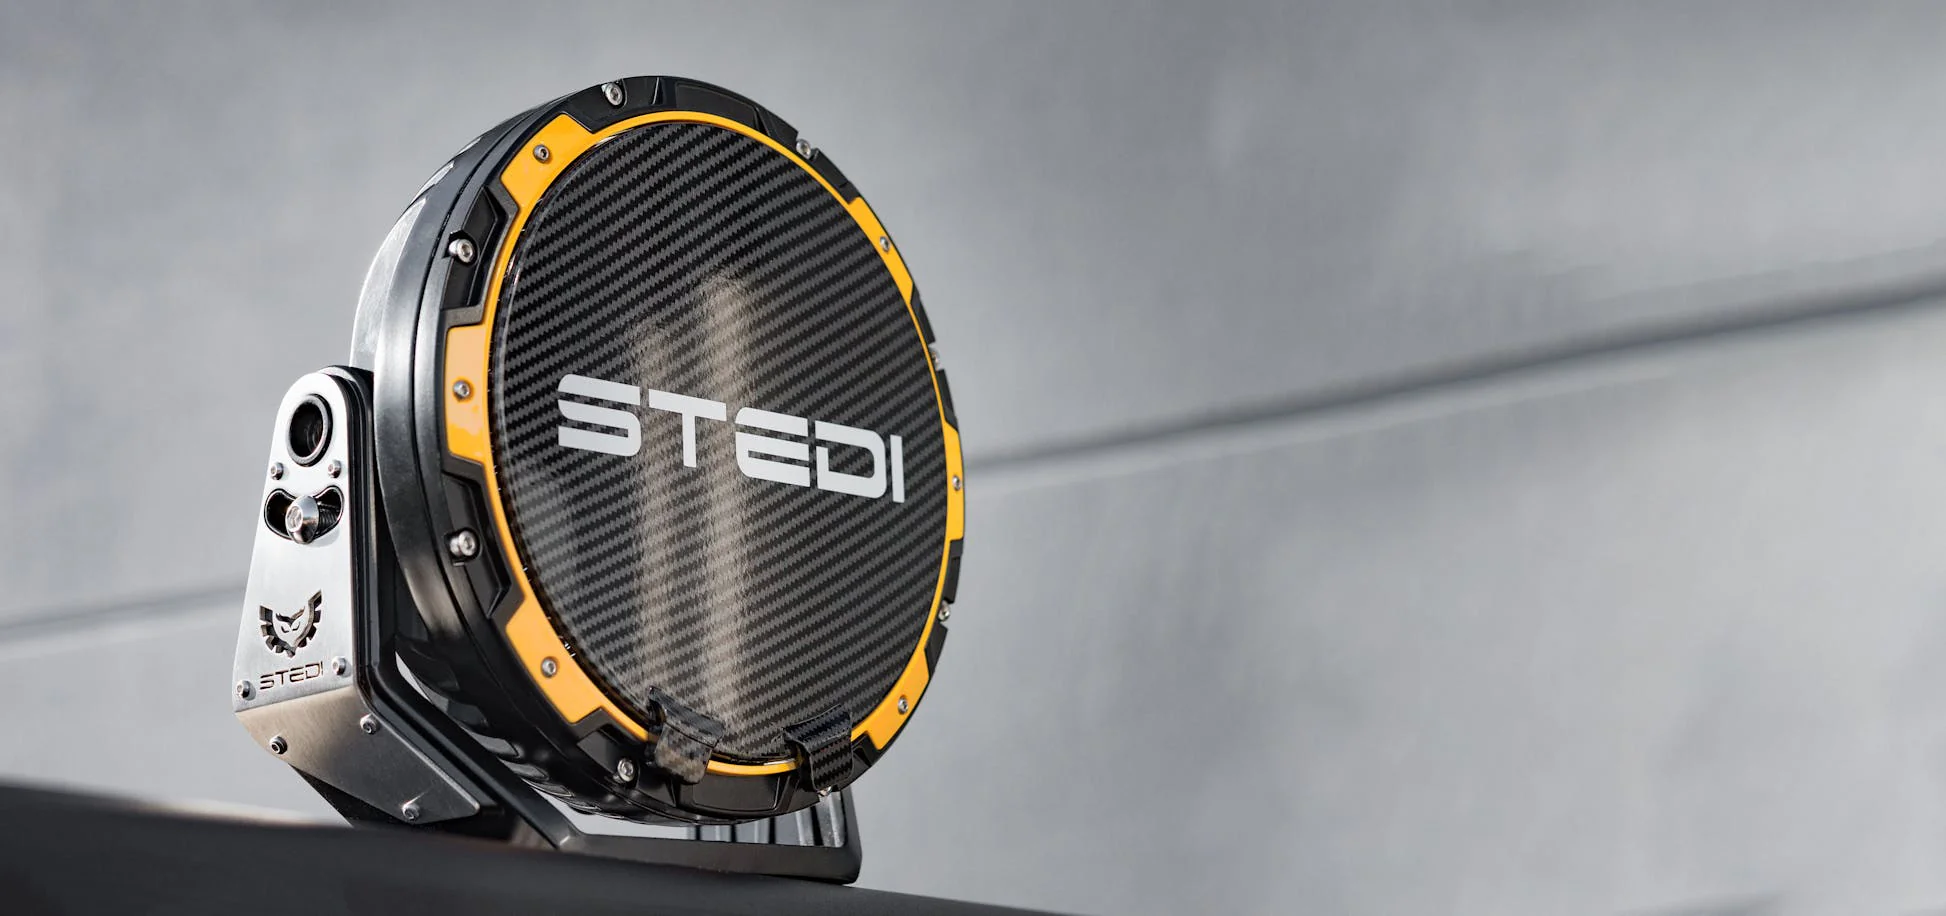 STEDI 8.5 Inch Type X Pro LED Driving Lights Pair